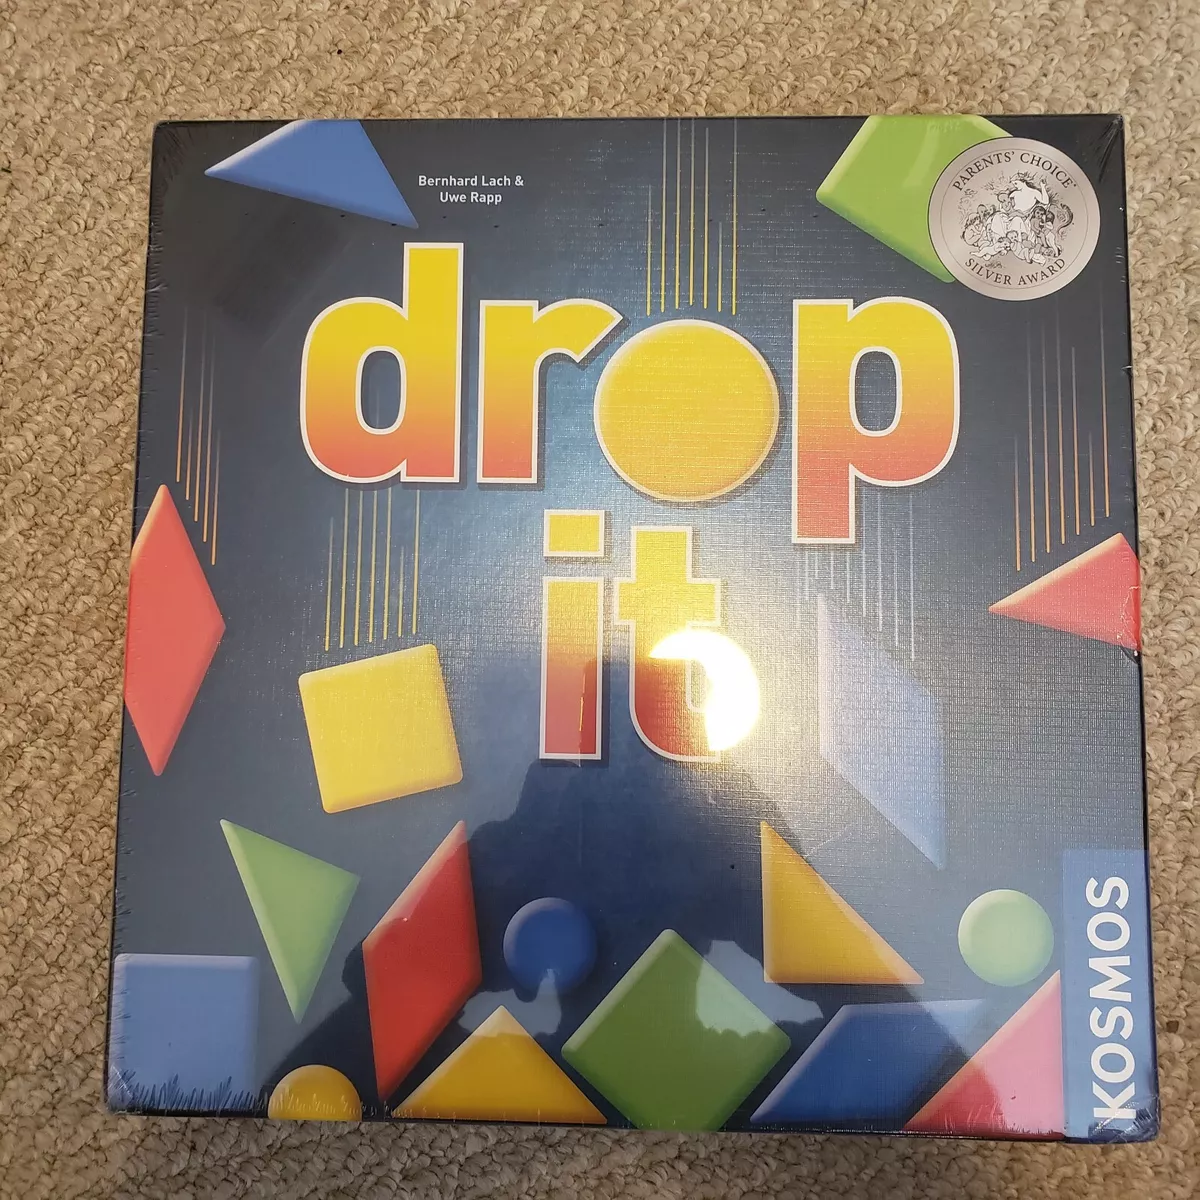 Drop It, Board Game